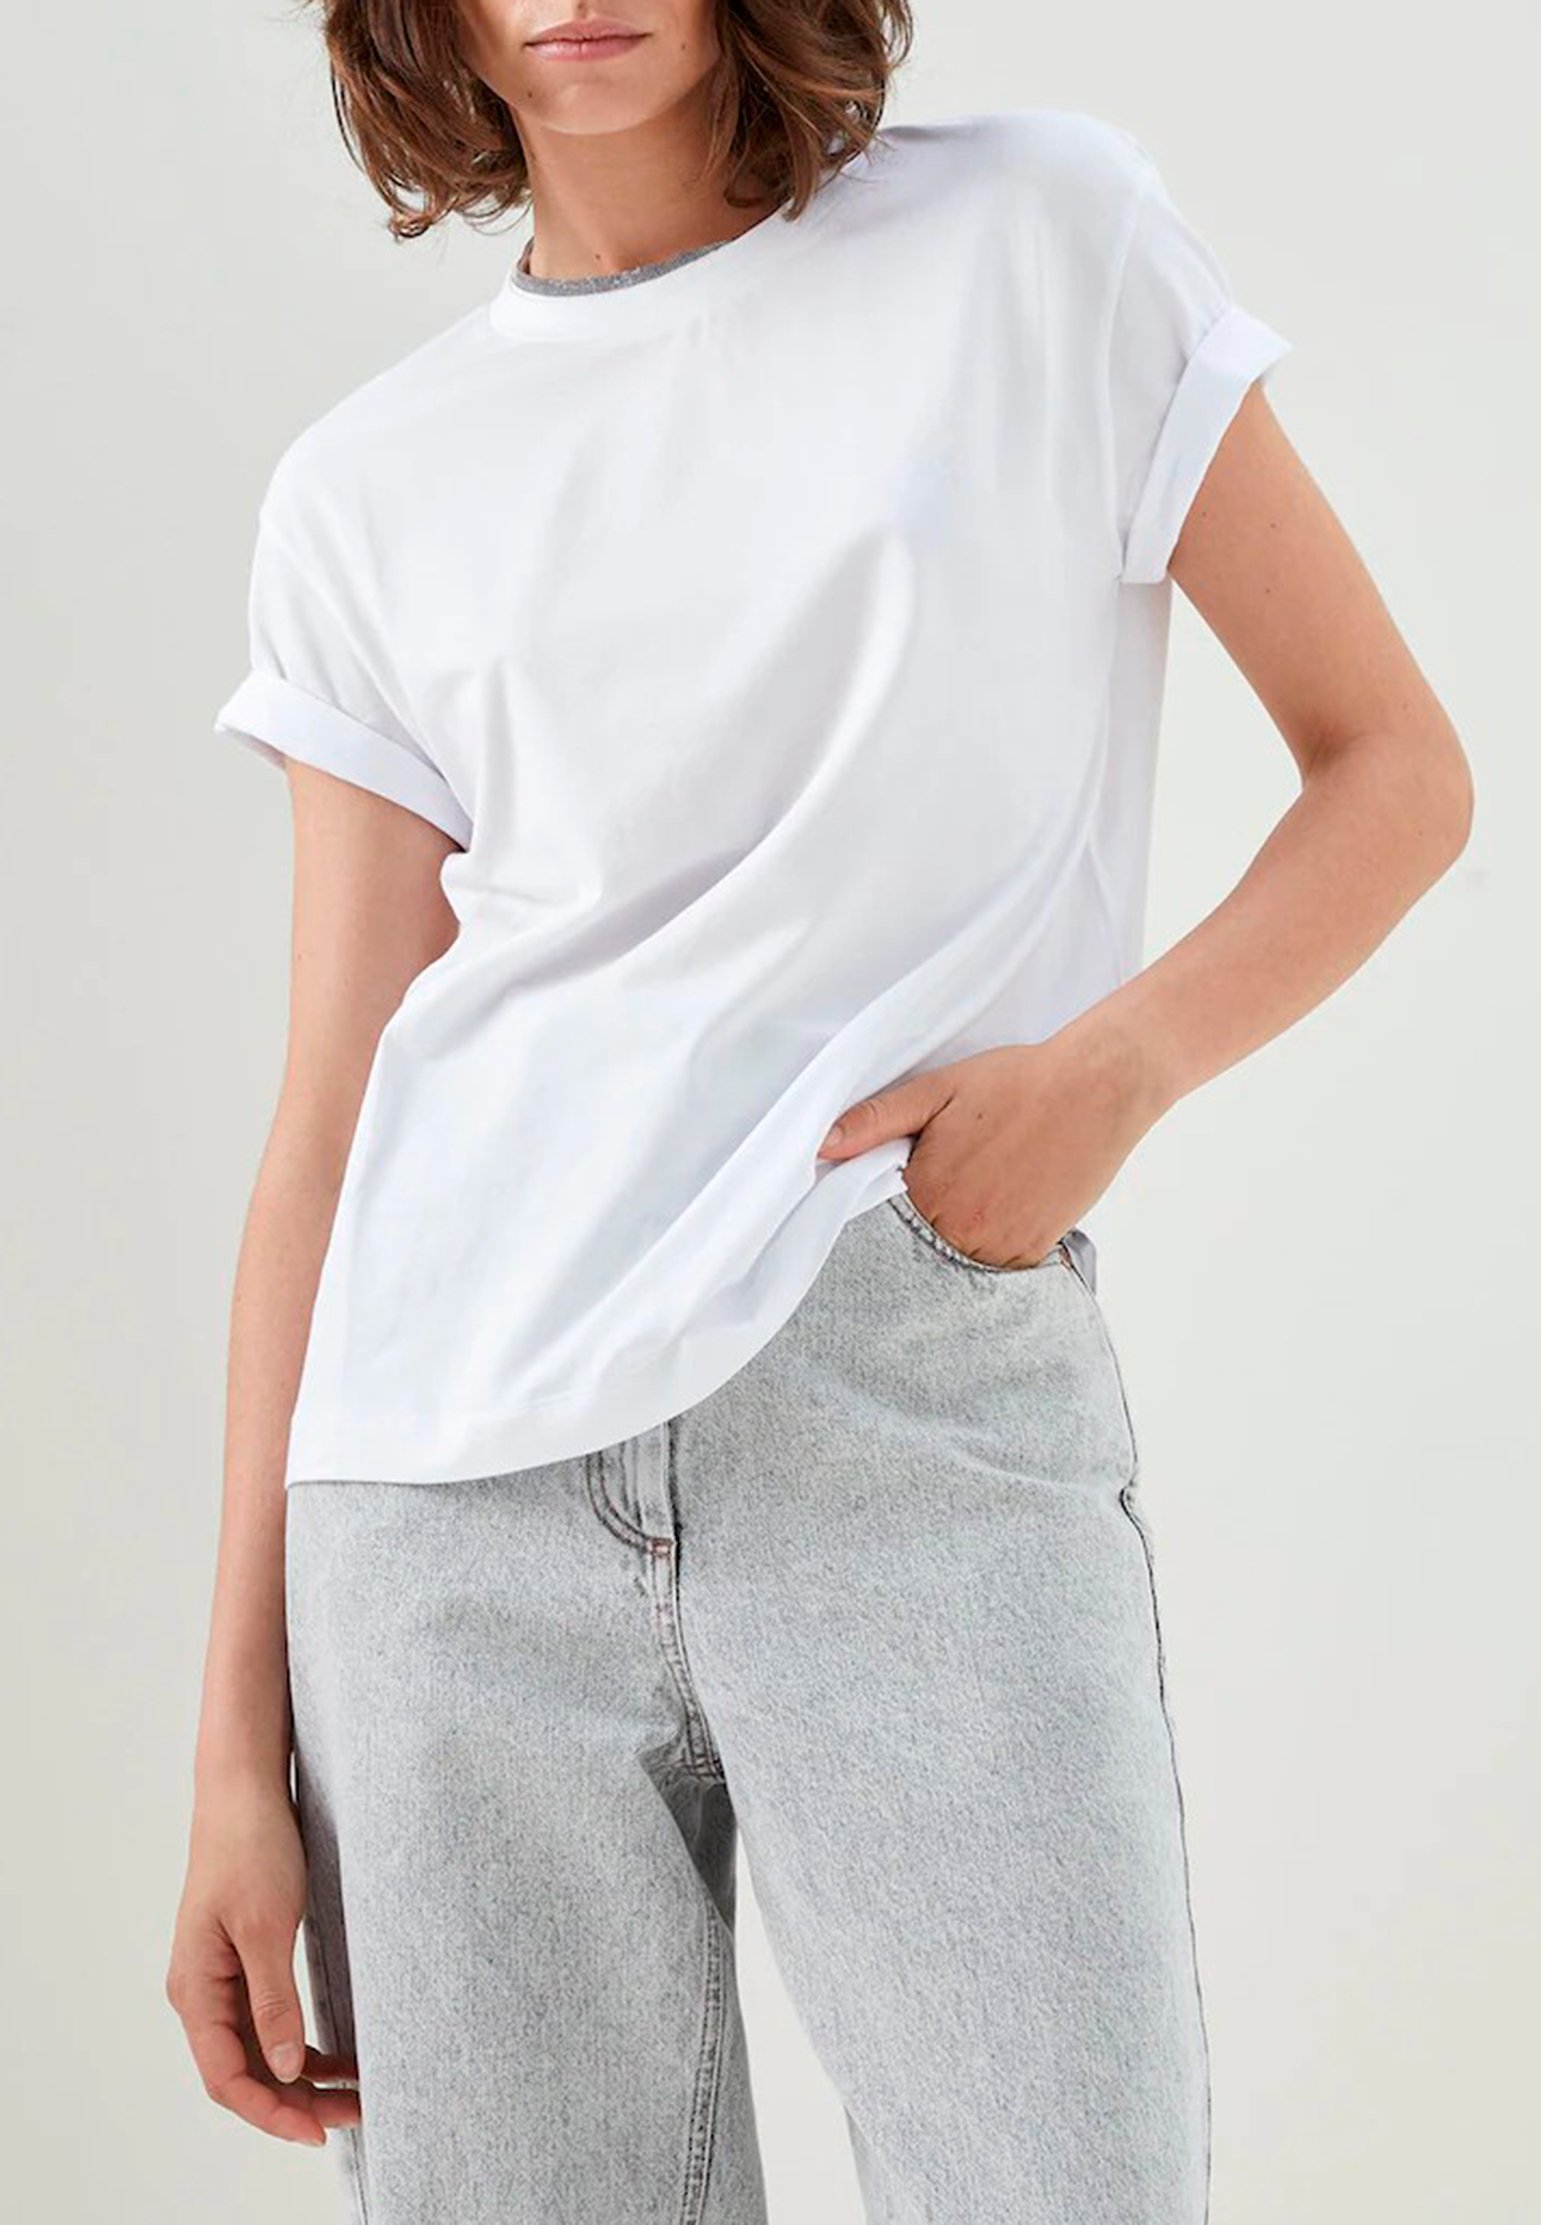 T-Shirt BRUNELLO CUCINELLI Color: white (Code: 269) in online store Allure